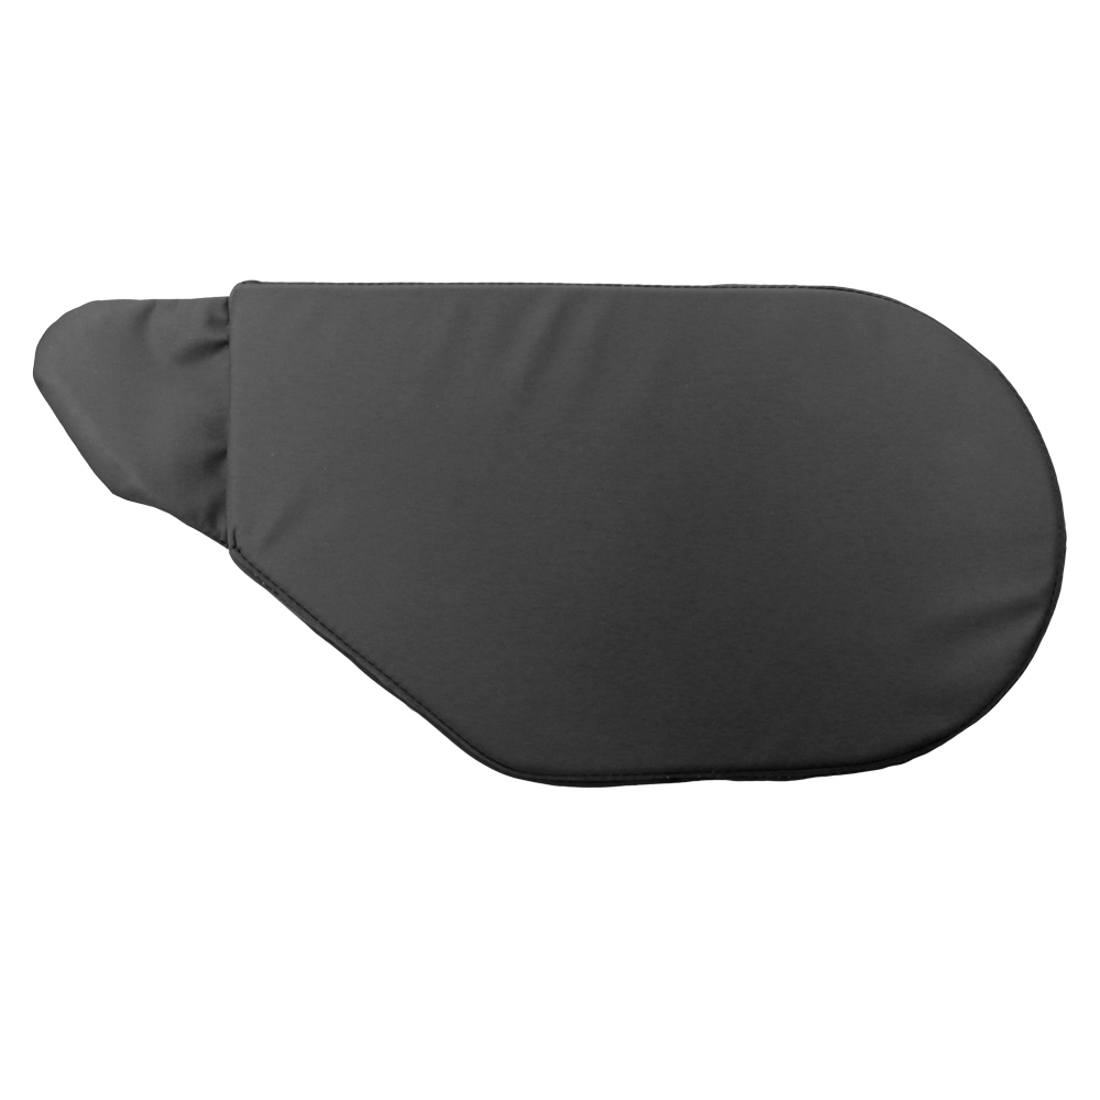 Upholstery-sideguard-Prio-product.jpg